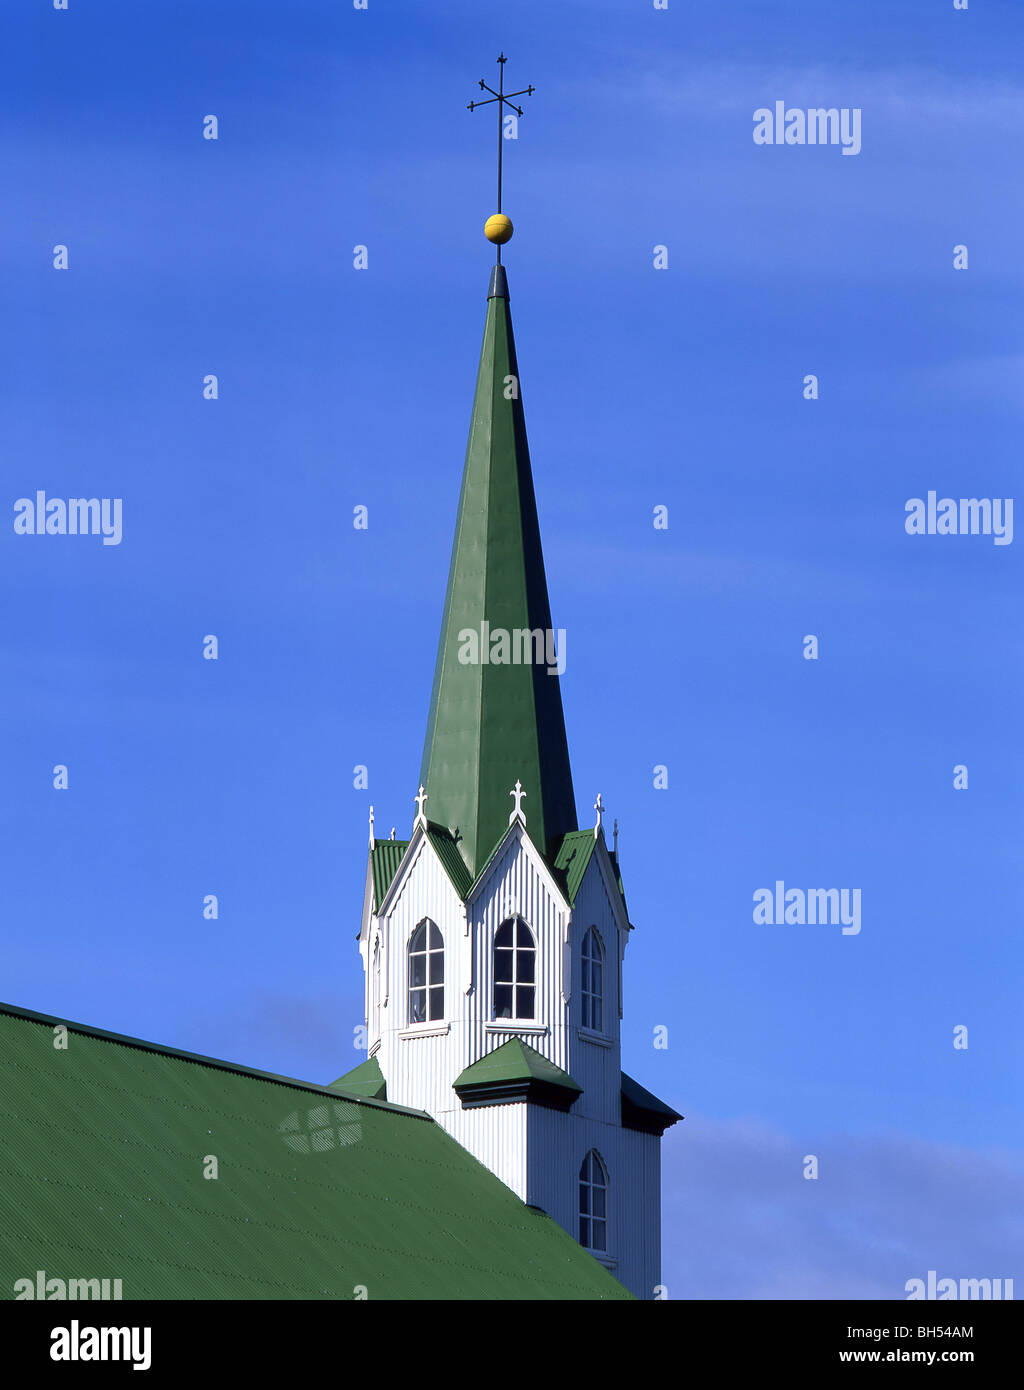 Frikirkjan Lutheran Church spire, Bernhoftstorfan, Reykjavik, Capital Region, Republic of Iceland Stock Photo